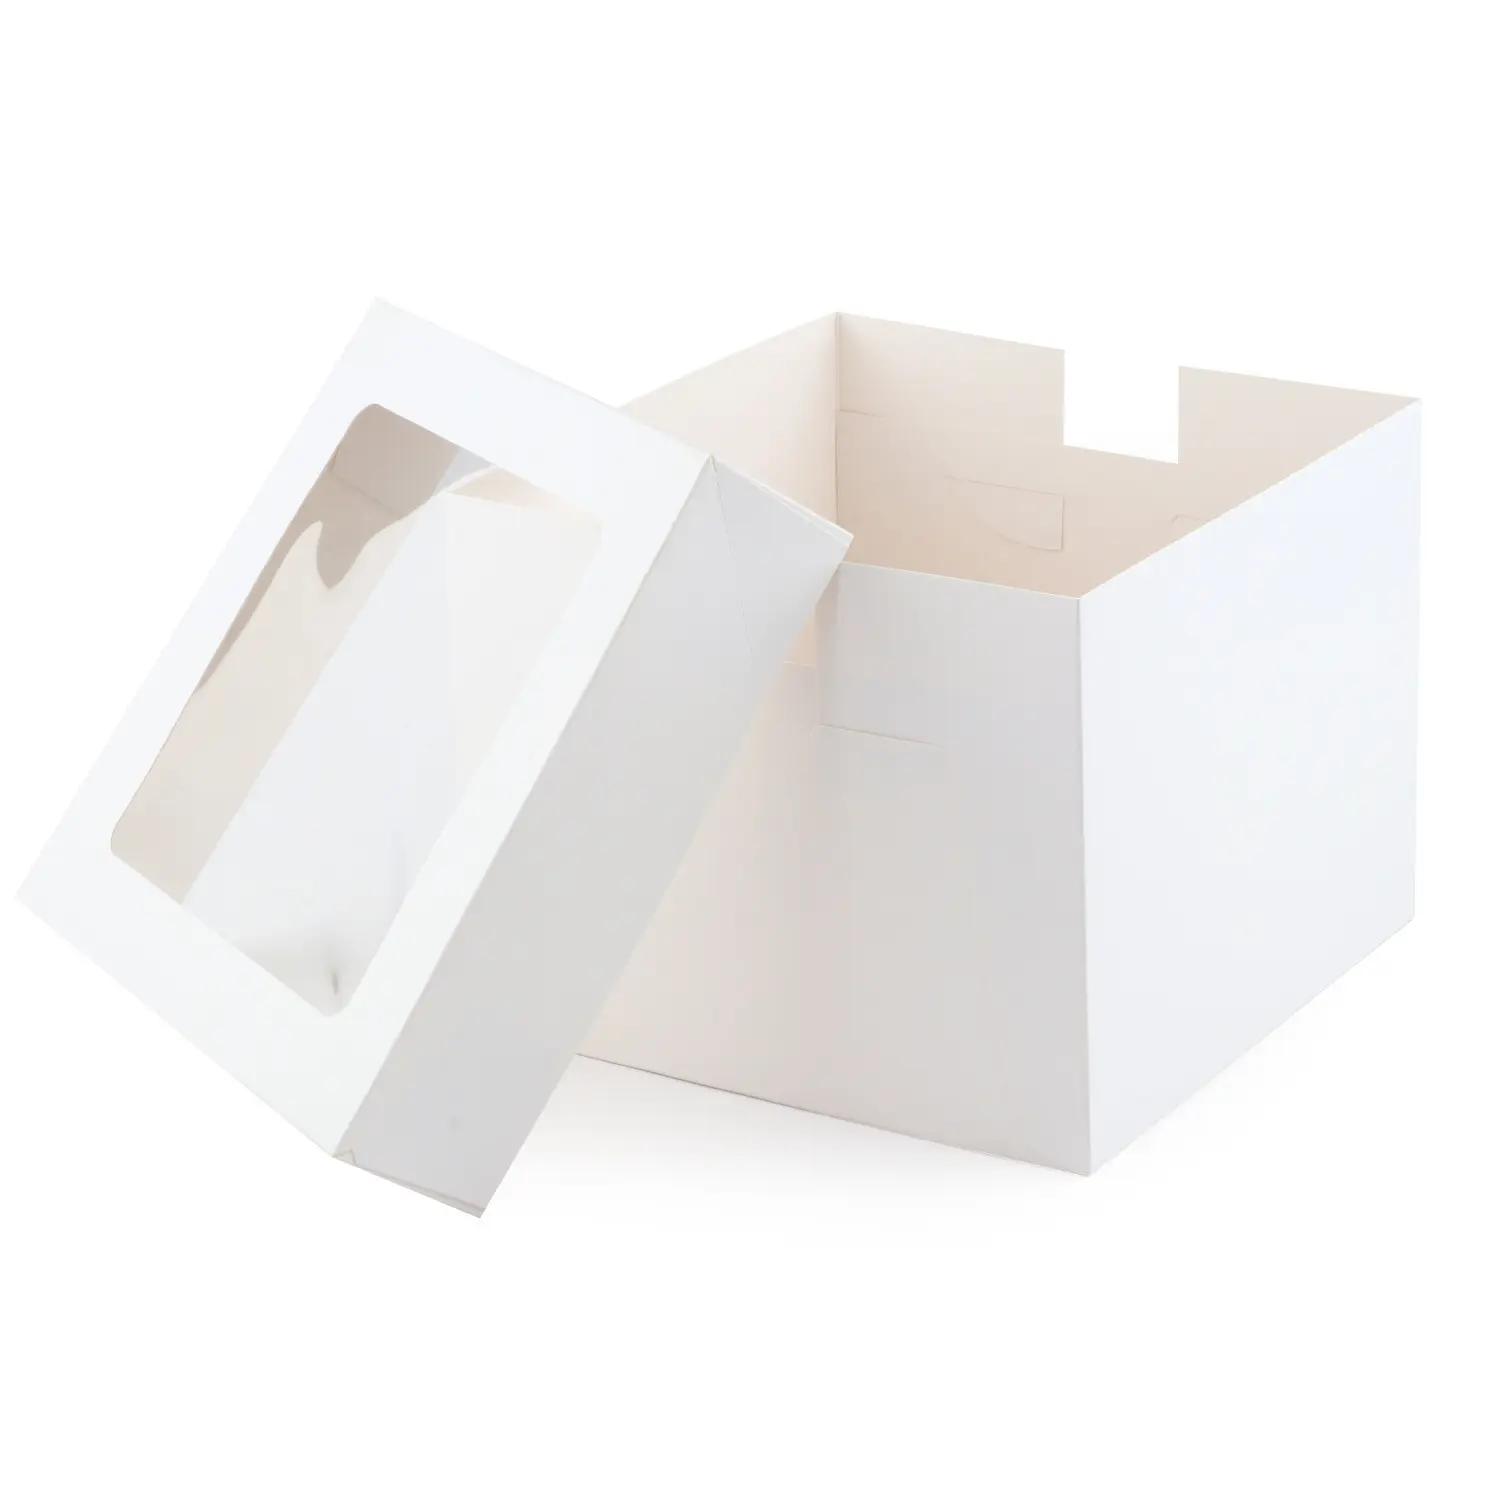 12x12x8 10x10x8 pulgadas cajas altas para pasteles con ventana blanco grande panadería hornear portador desechable contenedor para sacar para pasteles